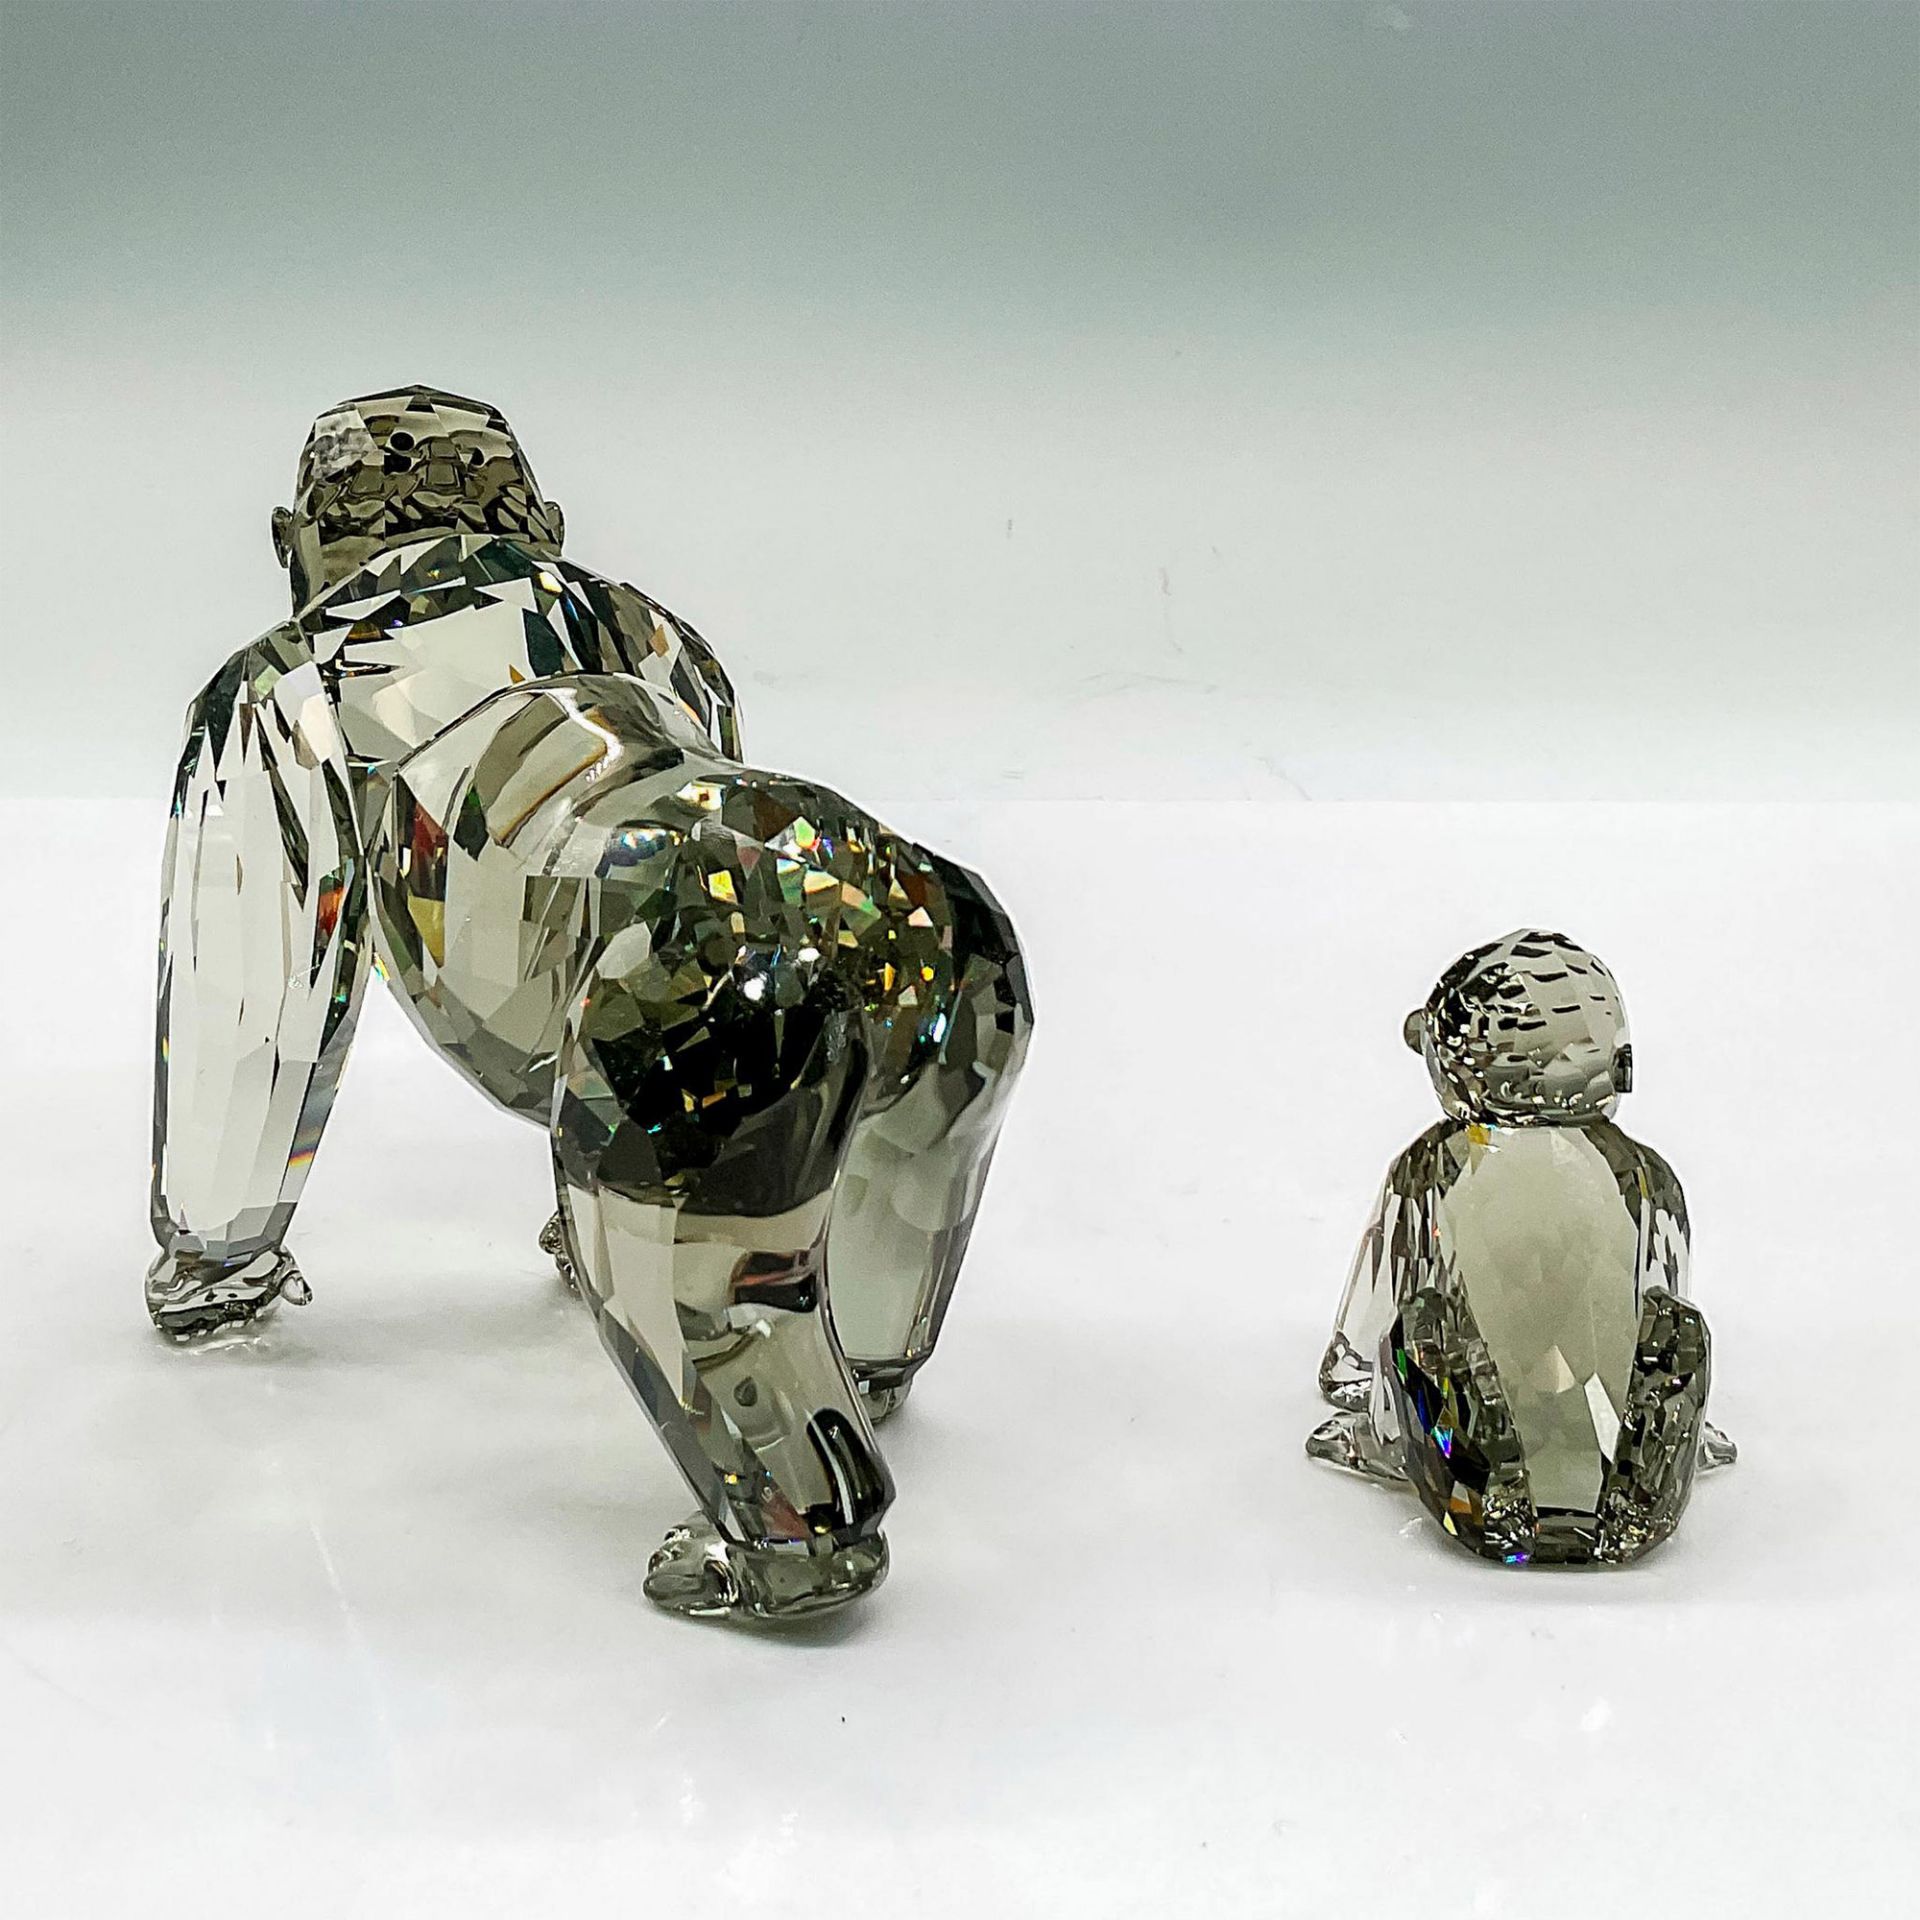 3pc Swarovski Crystal Figurines, Mother Gorilla/Baby/Plaque - Image 3 of 5